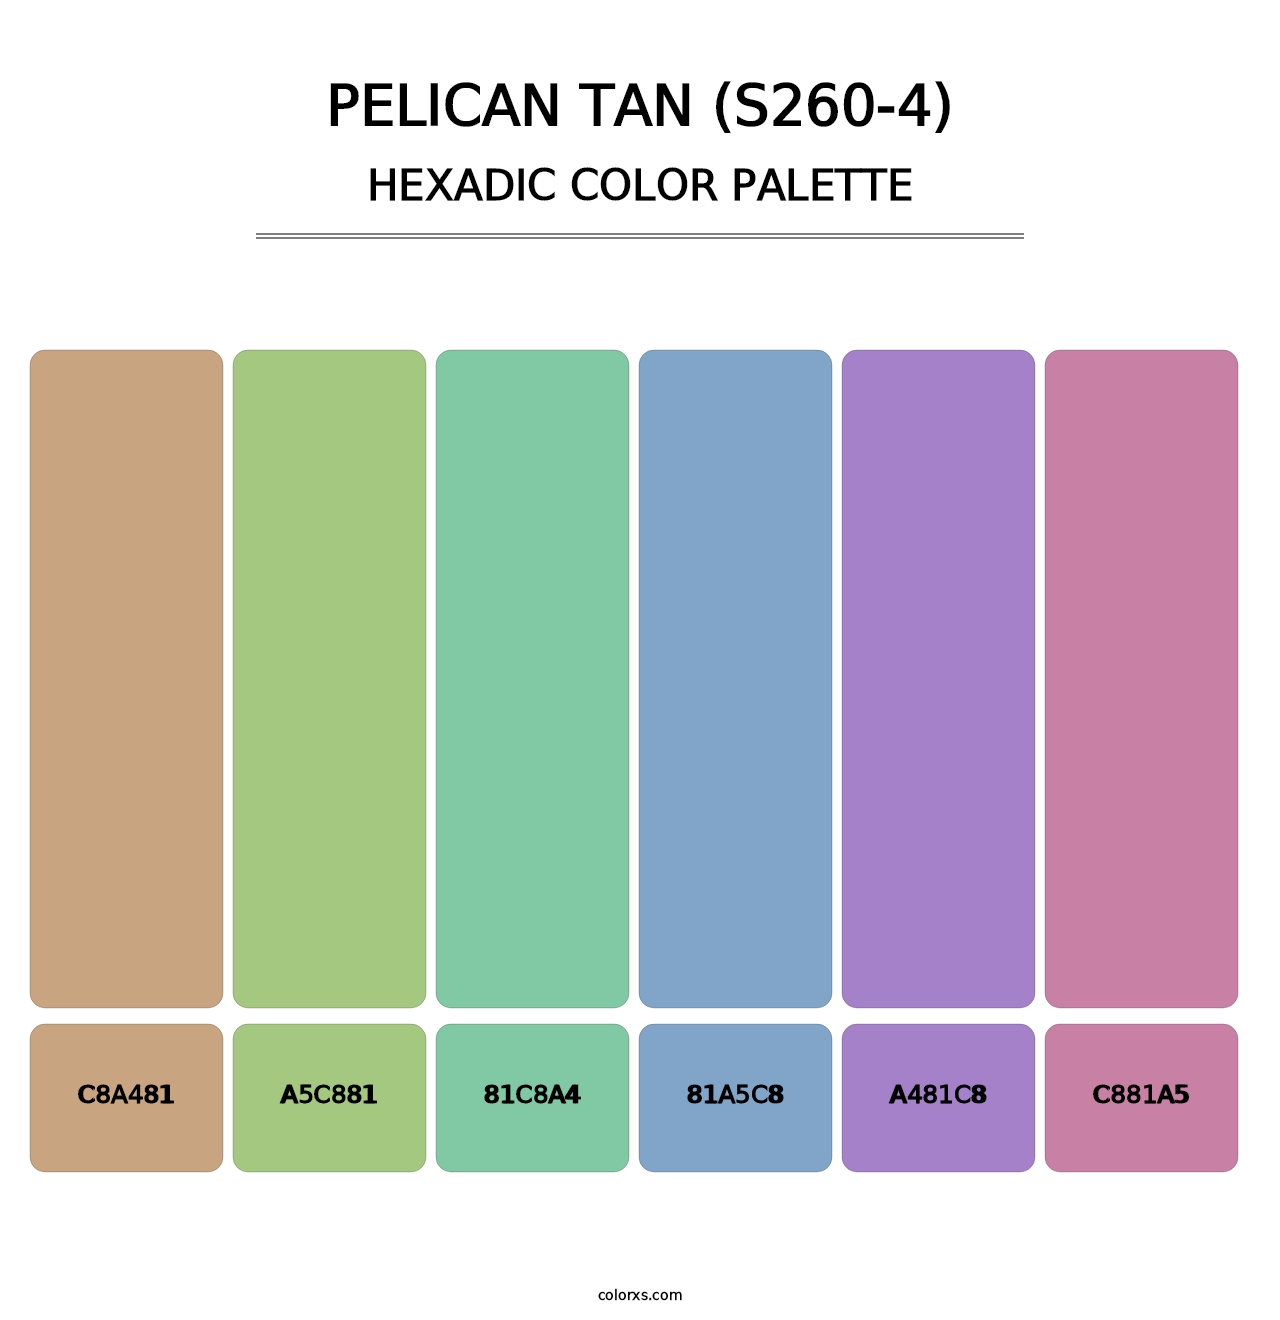 Pelican Tan (S260-4) - Hexadic Color Palette